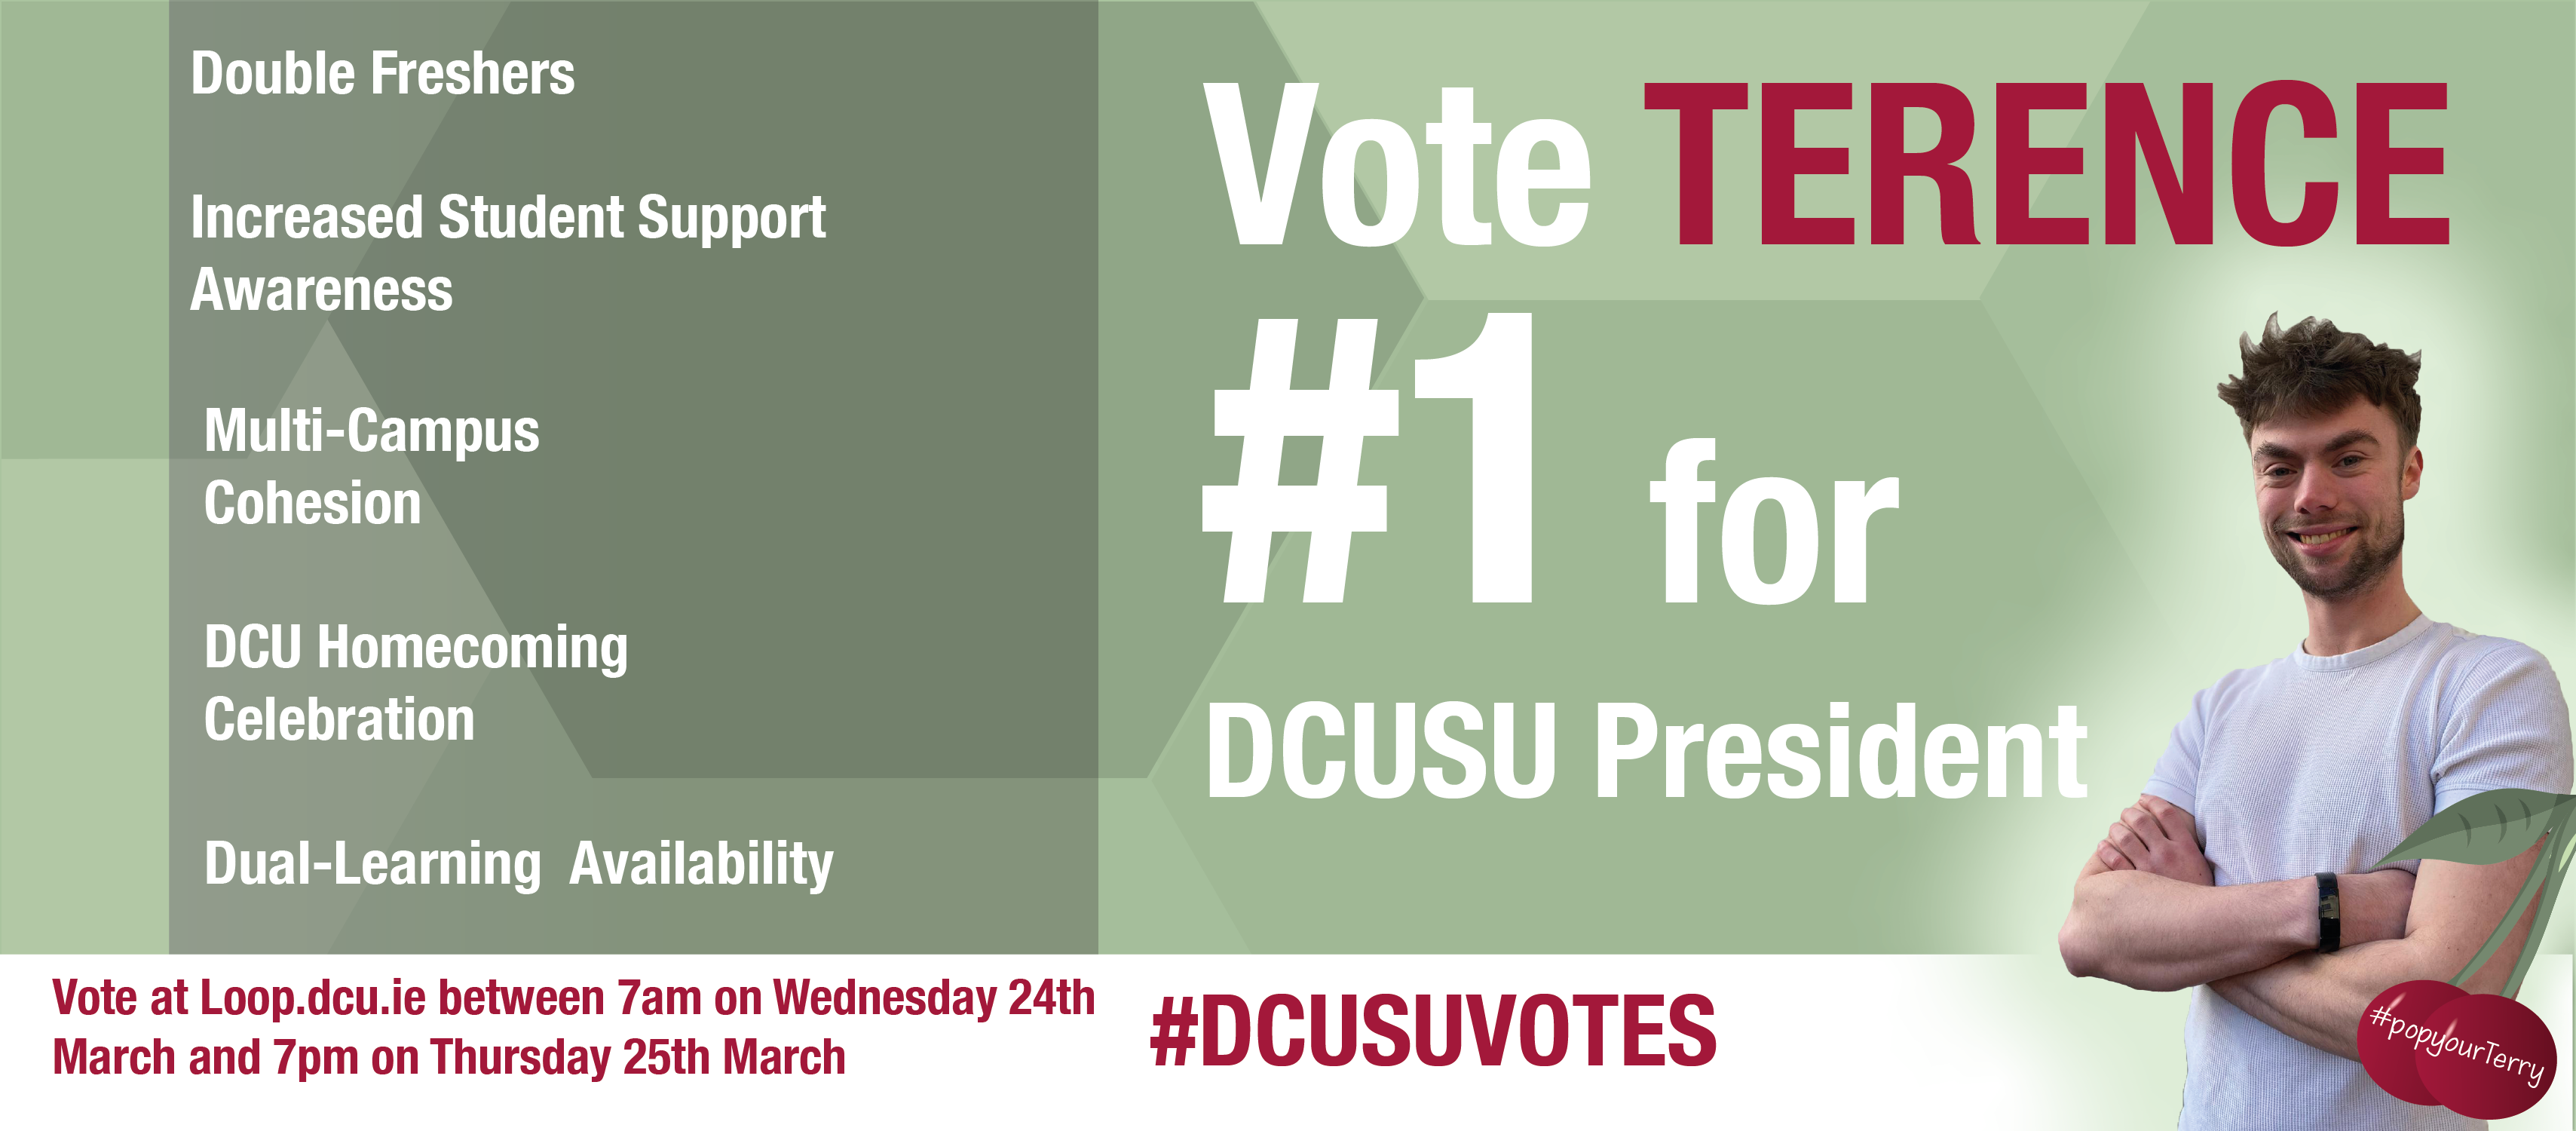 Vote Terence DCUSU President